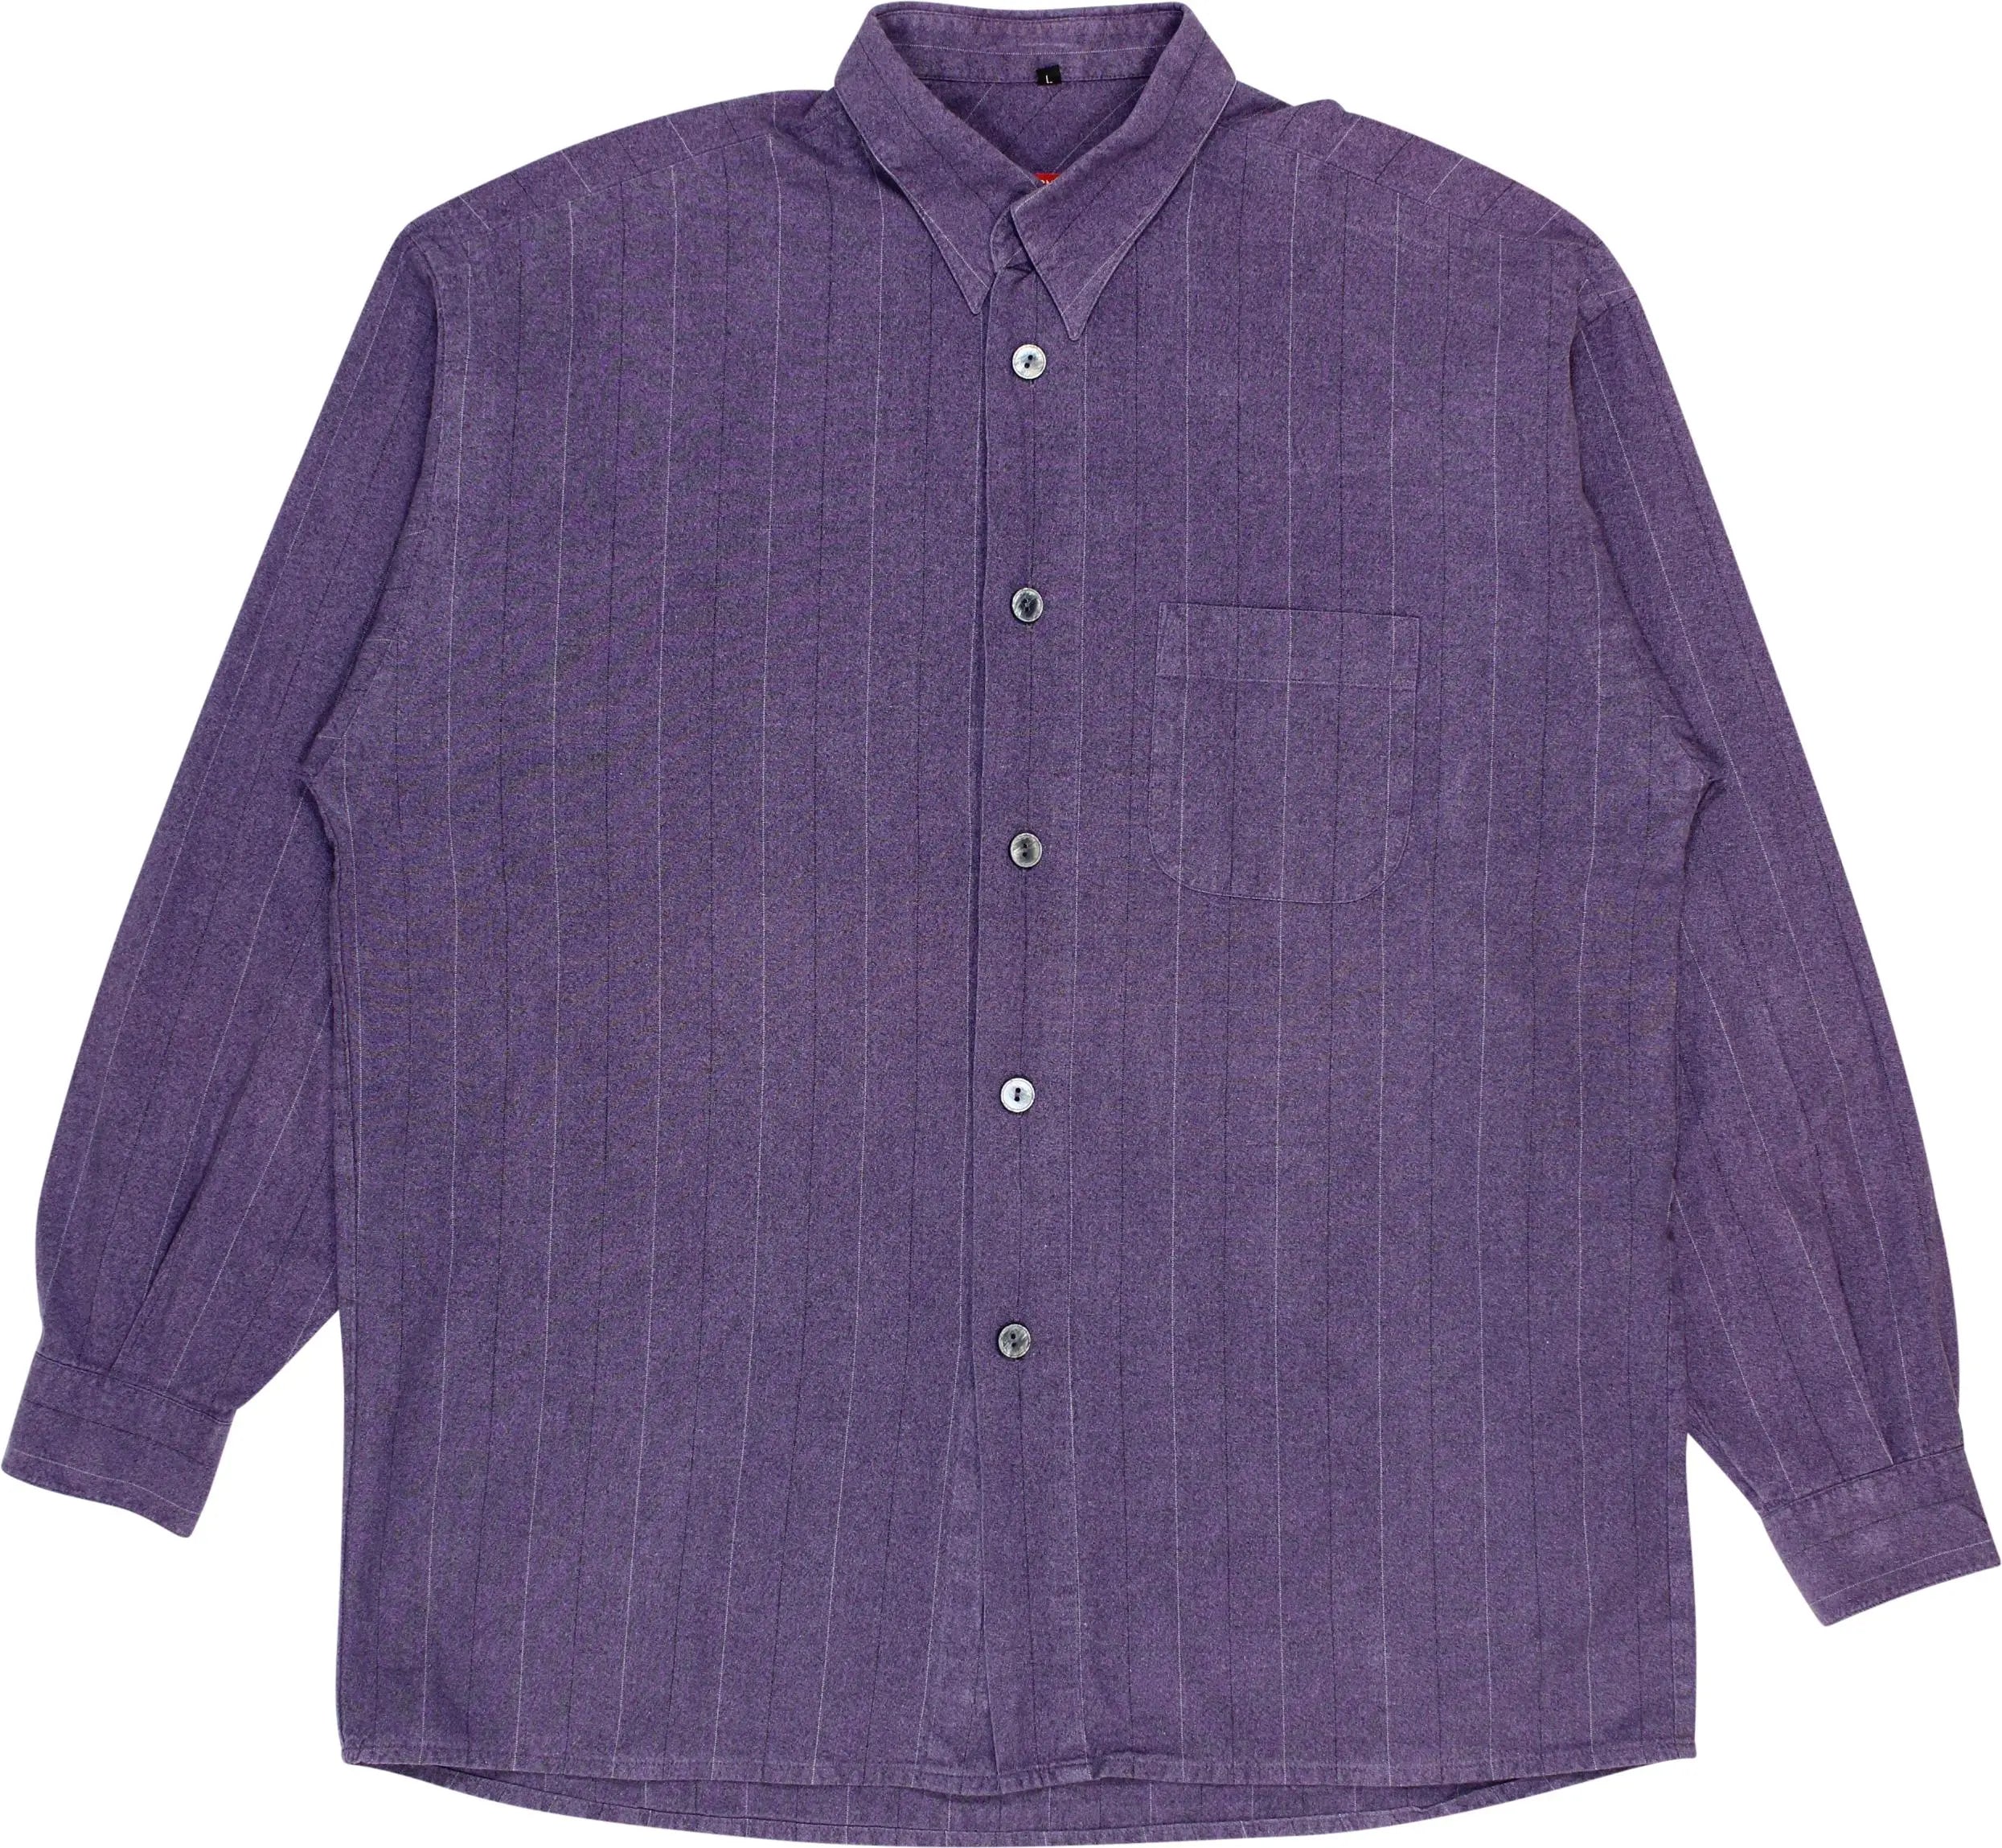 Signum - Vintage Purple Striped Shirt- ThriftTale.com - Vintage and second handclothing